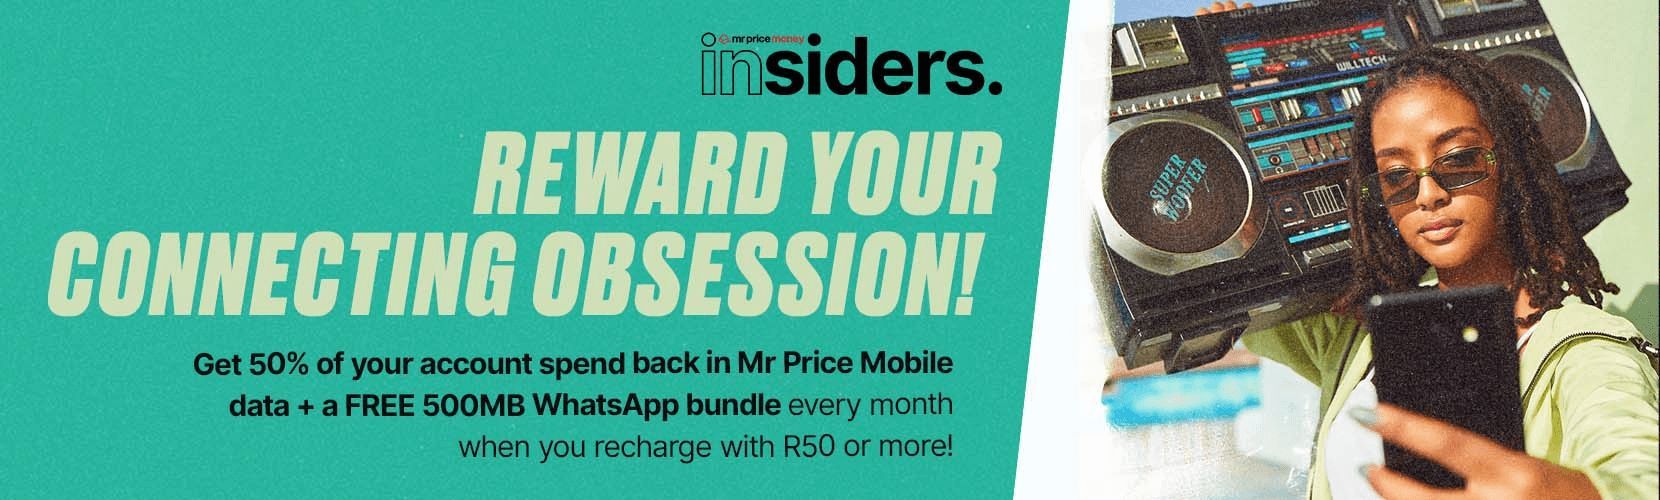 Mr Price Money nsiders exclusive benefits